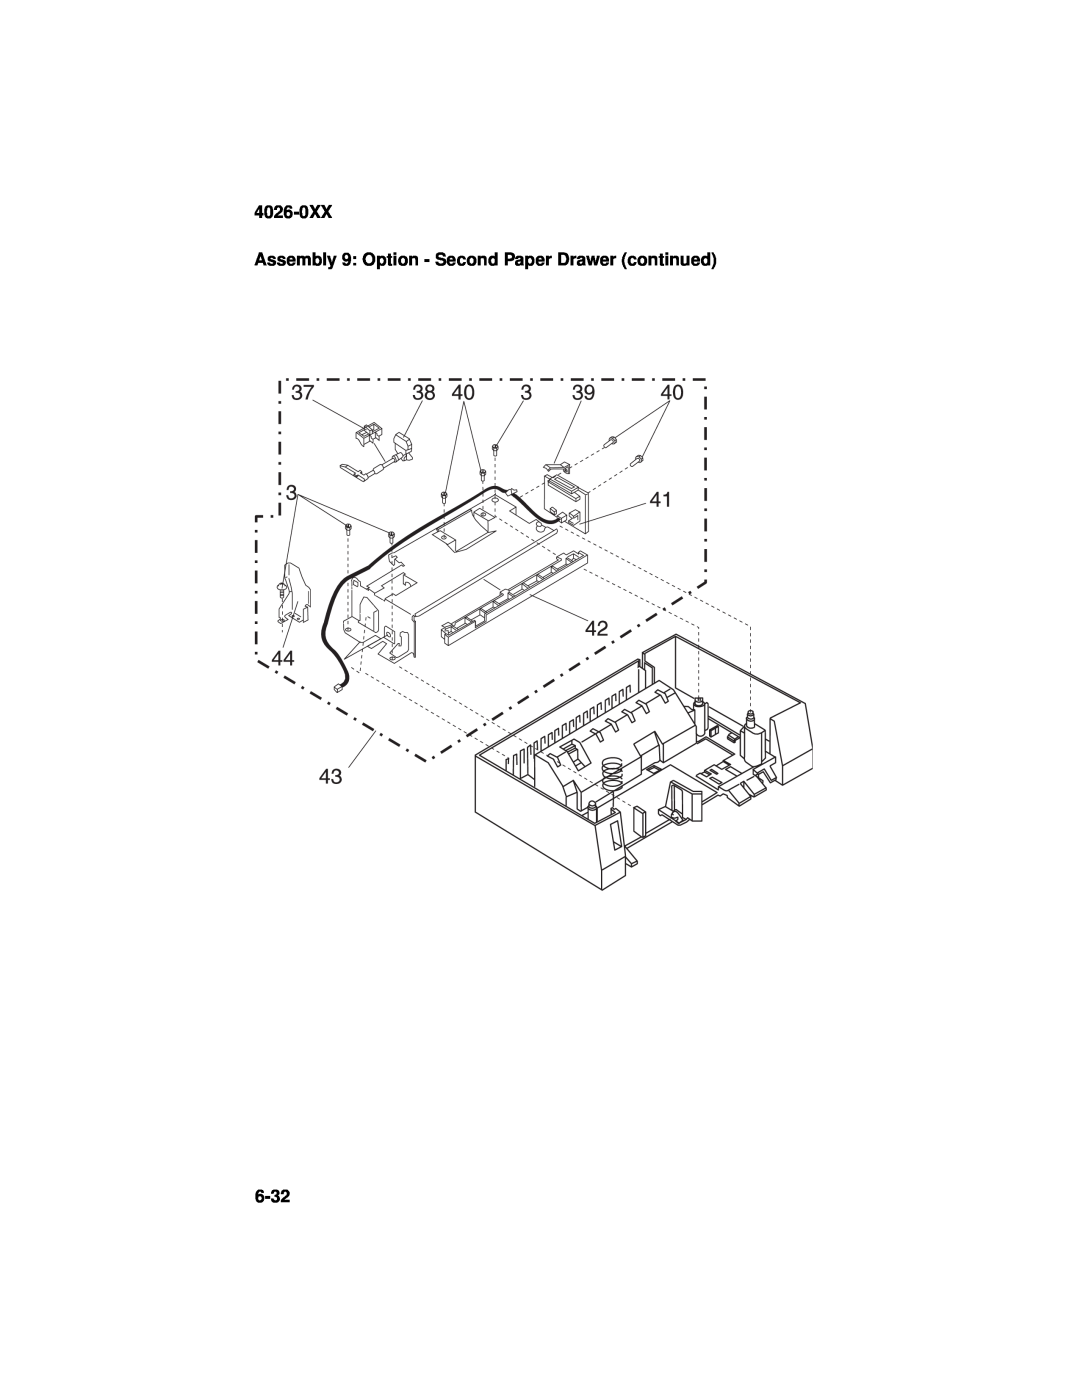 Lexmark OptraTM manual 6-32, 4026-0XX 